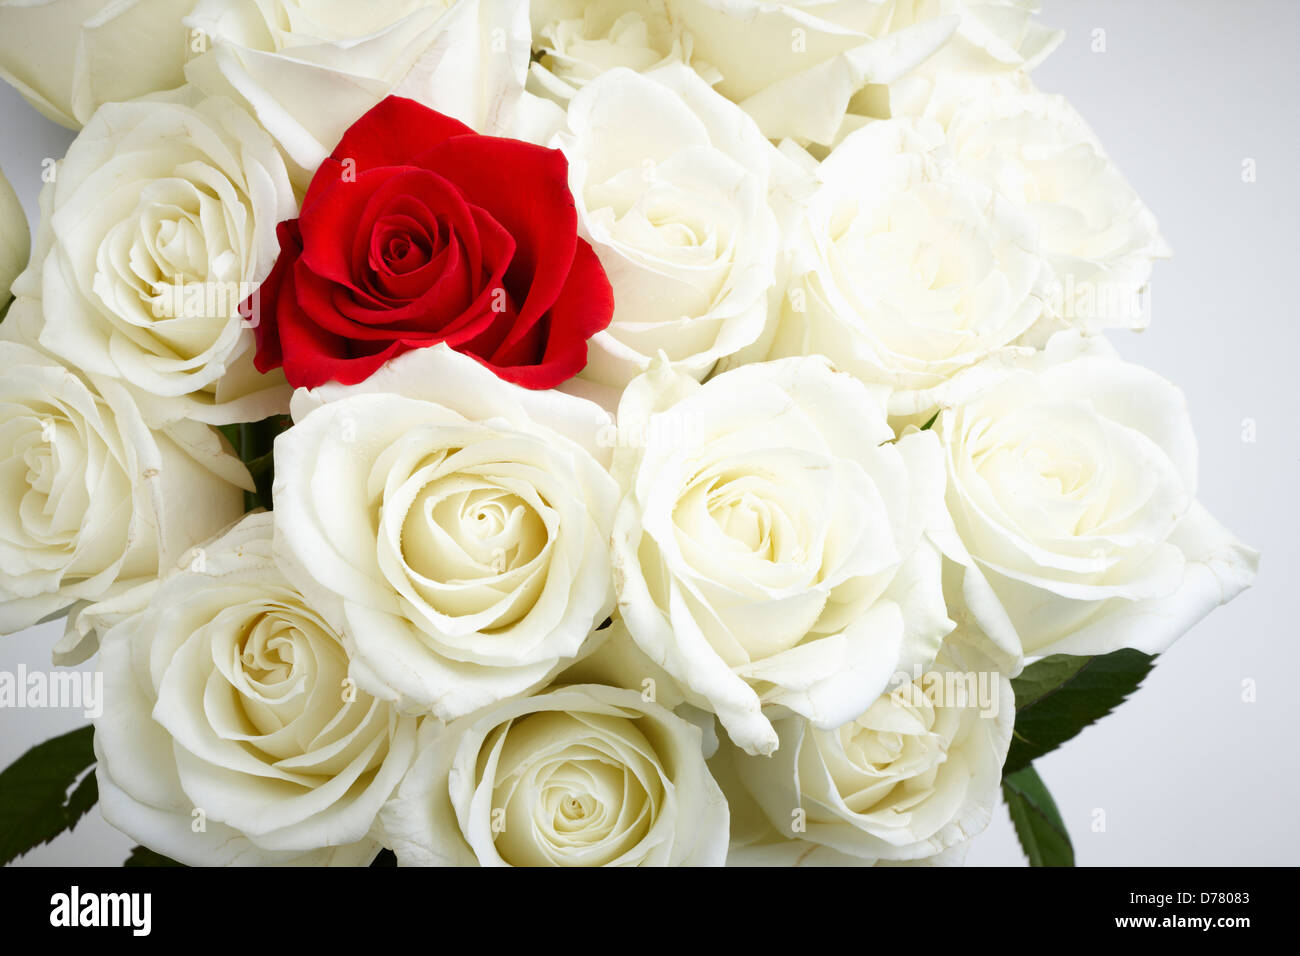 Une rose parmi les roses blanches Photo Stock - Alamy